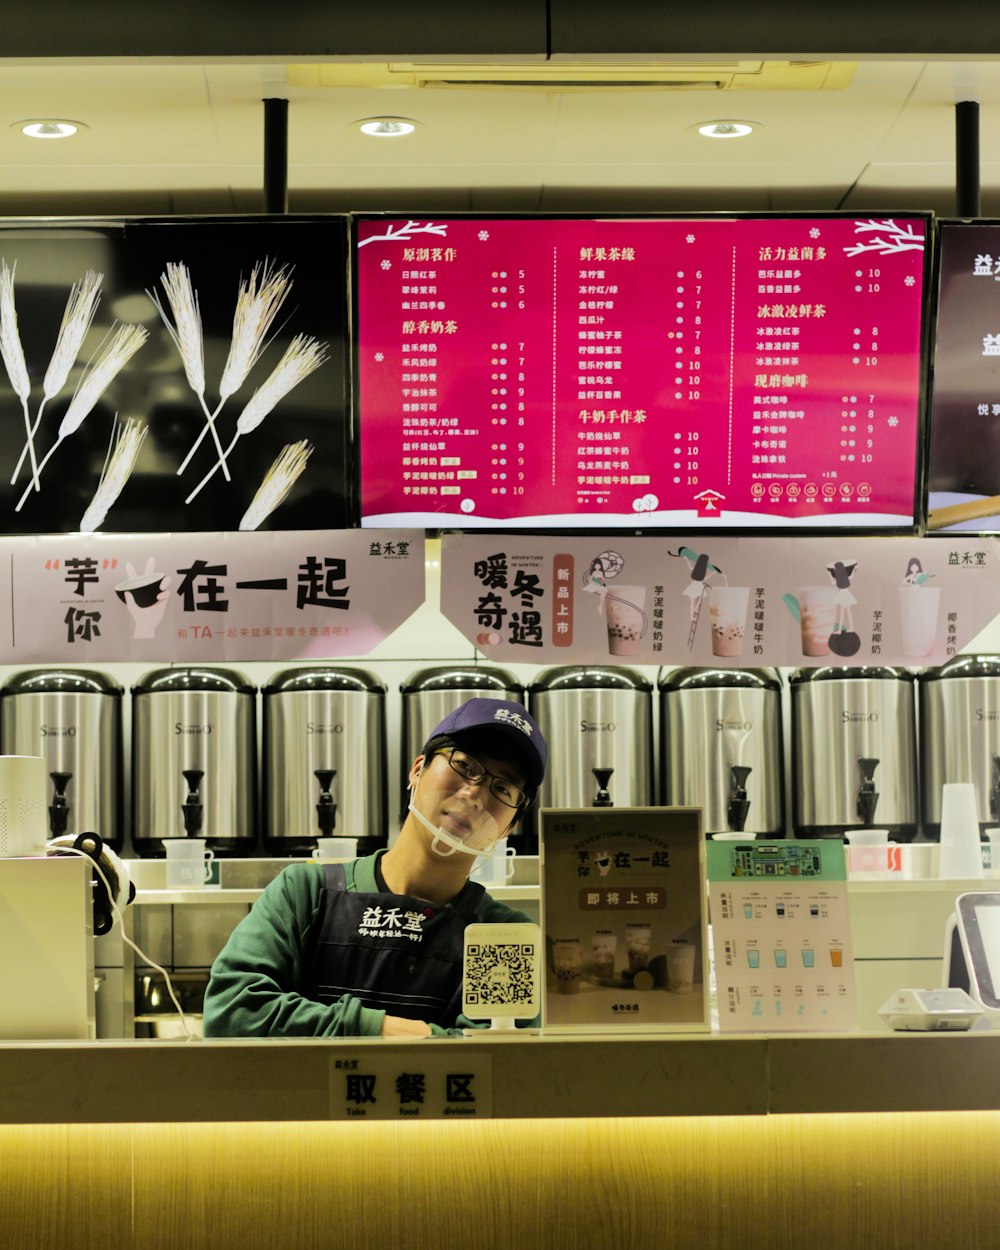 Man in black and white nike jacket standing near counter photo – Free  Shenzhen Image on Unsplash